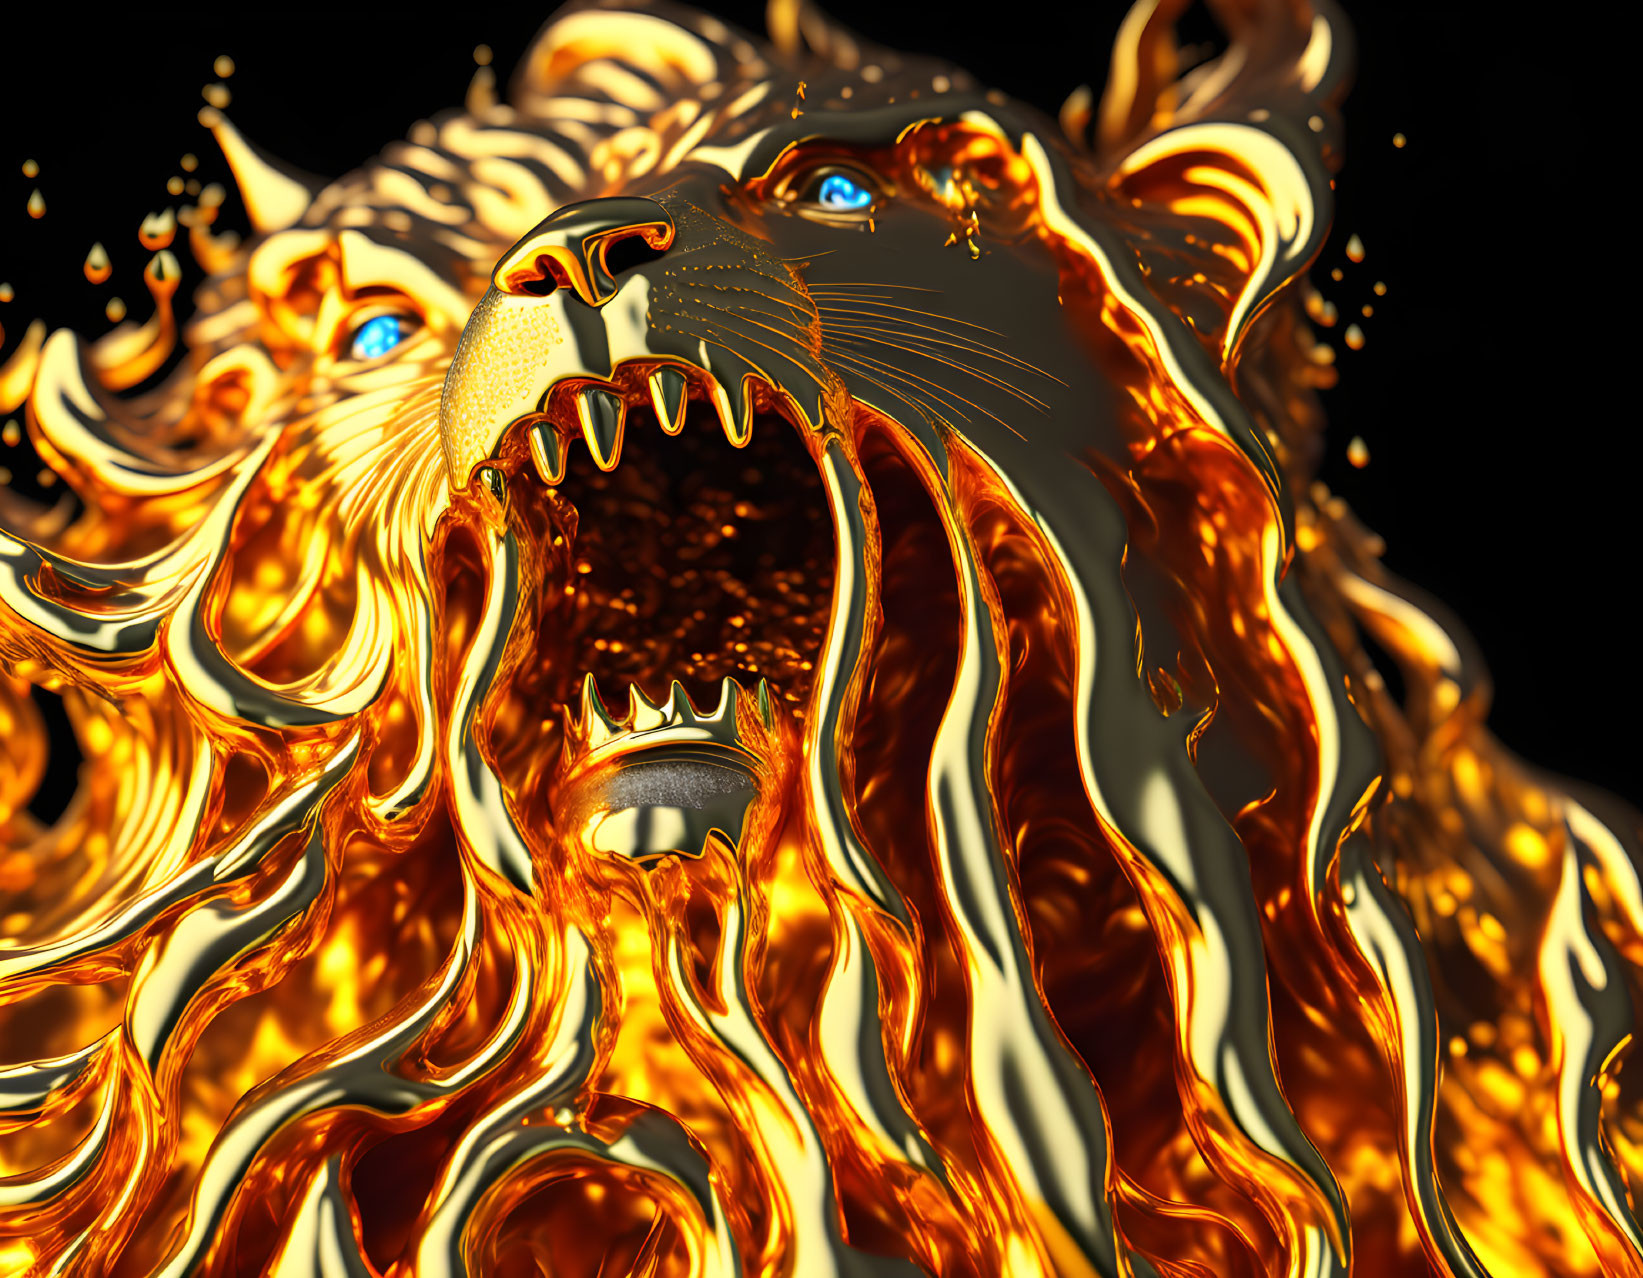 Vivid digital artwork: Roaring lion with flowing mane on dark background